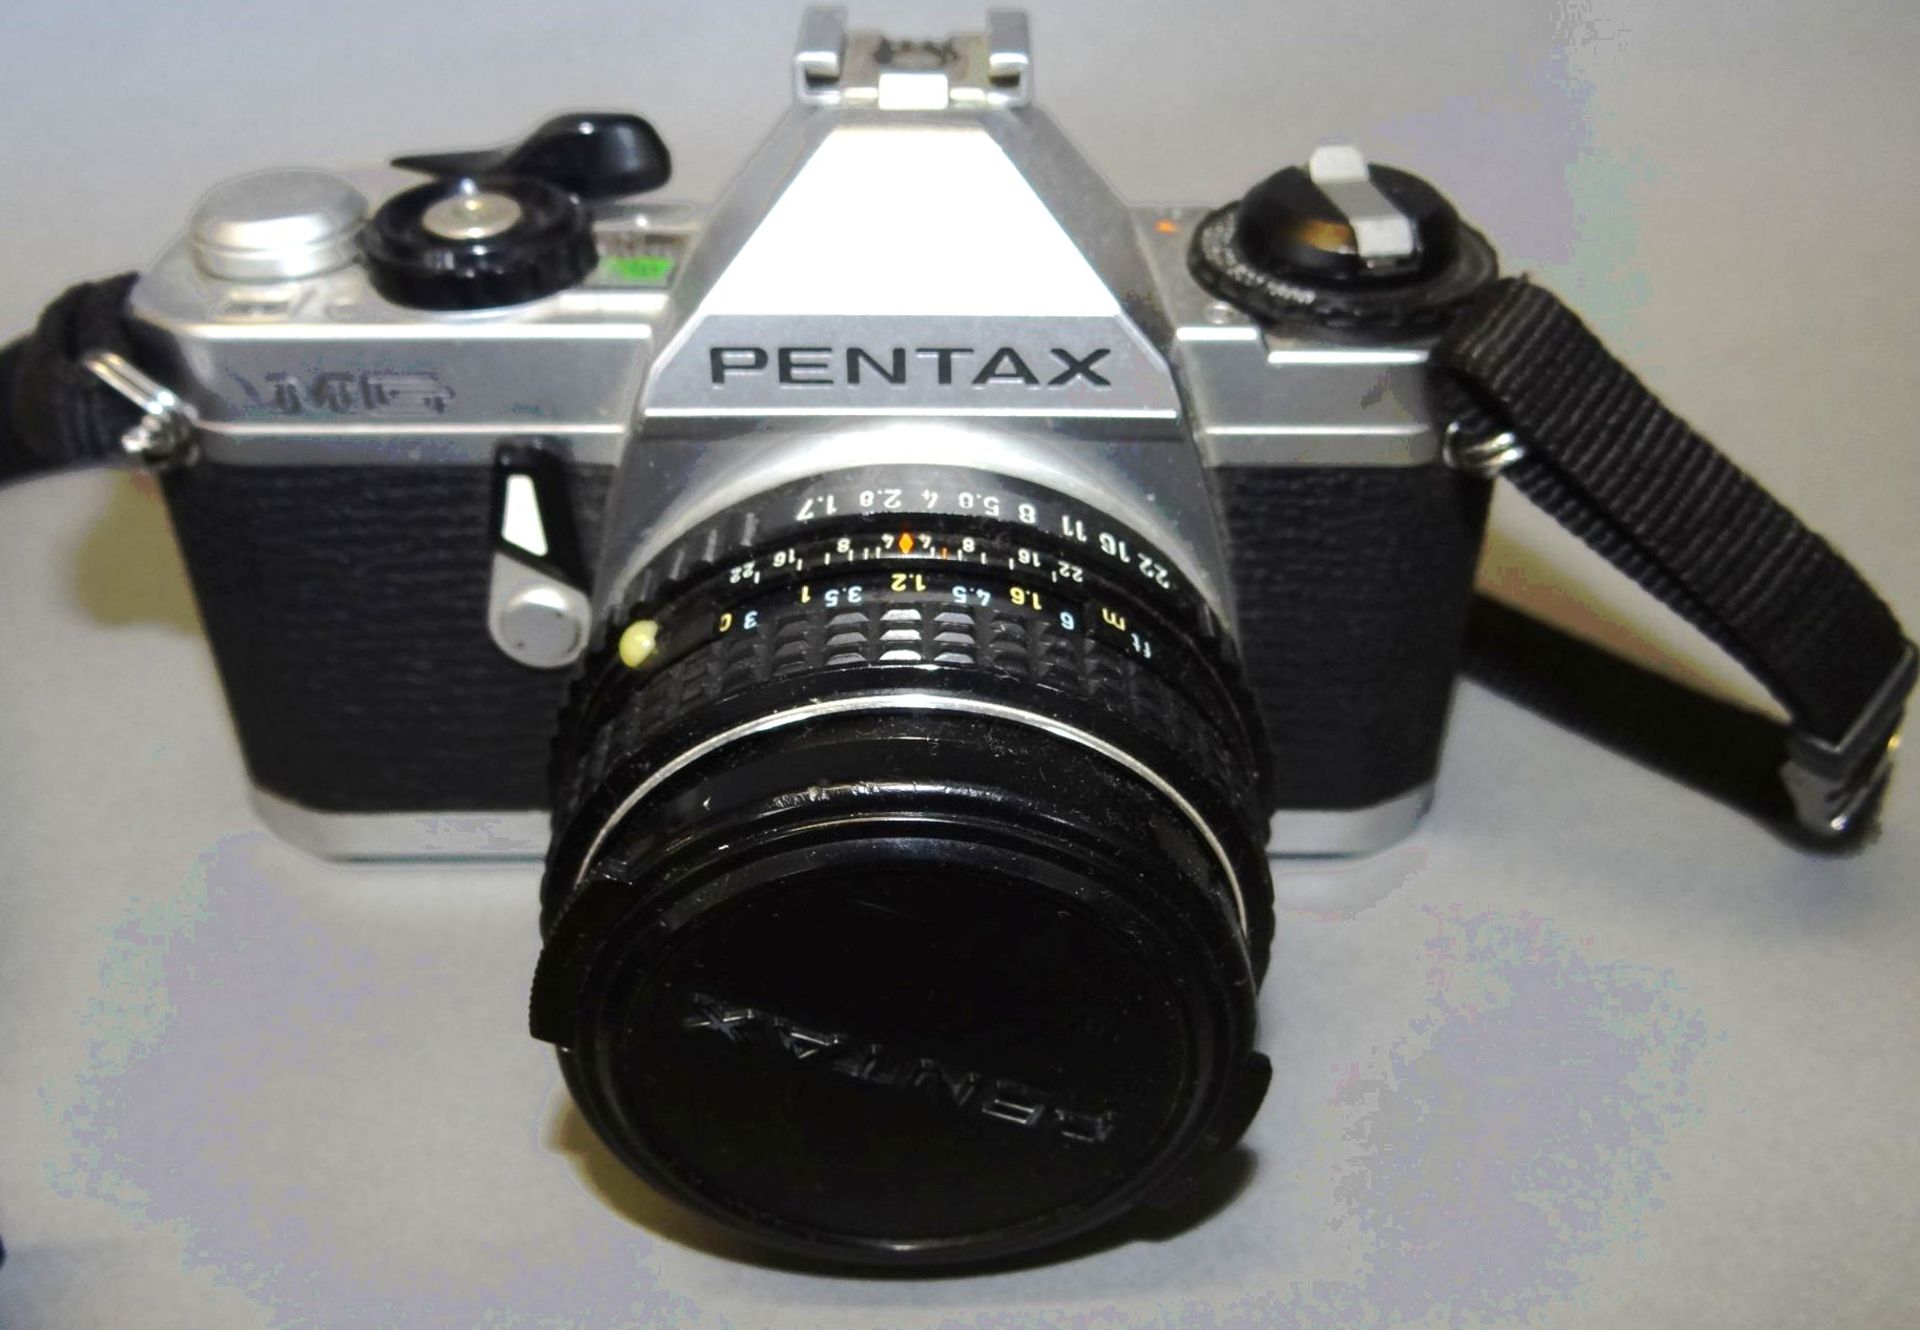 Spiegelreflex "Pentax" MG, Objektiv 1:17-50 mm